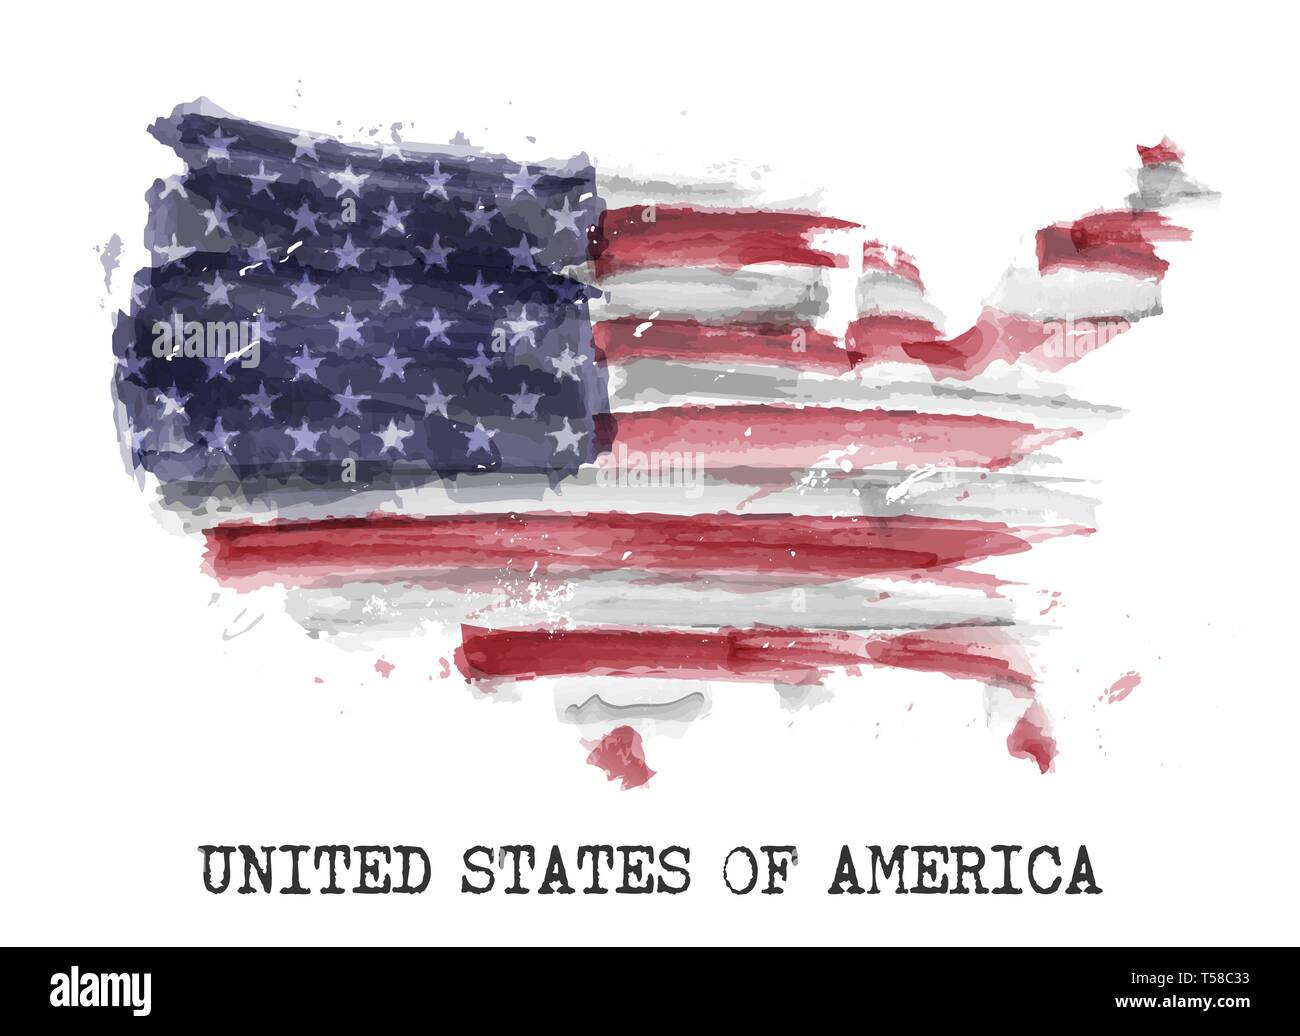 Amerika Flagge Aquarell Malerei Design. Land Karte gestalten. Tag der Unabhängigkeit Konzept (4. Juli 1776). Vektor. Stock Vektor